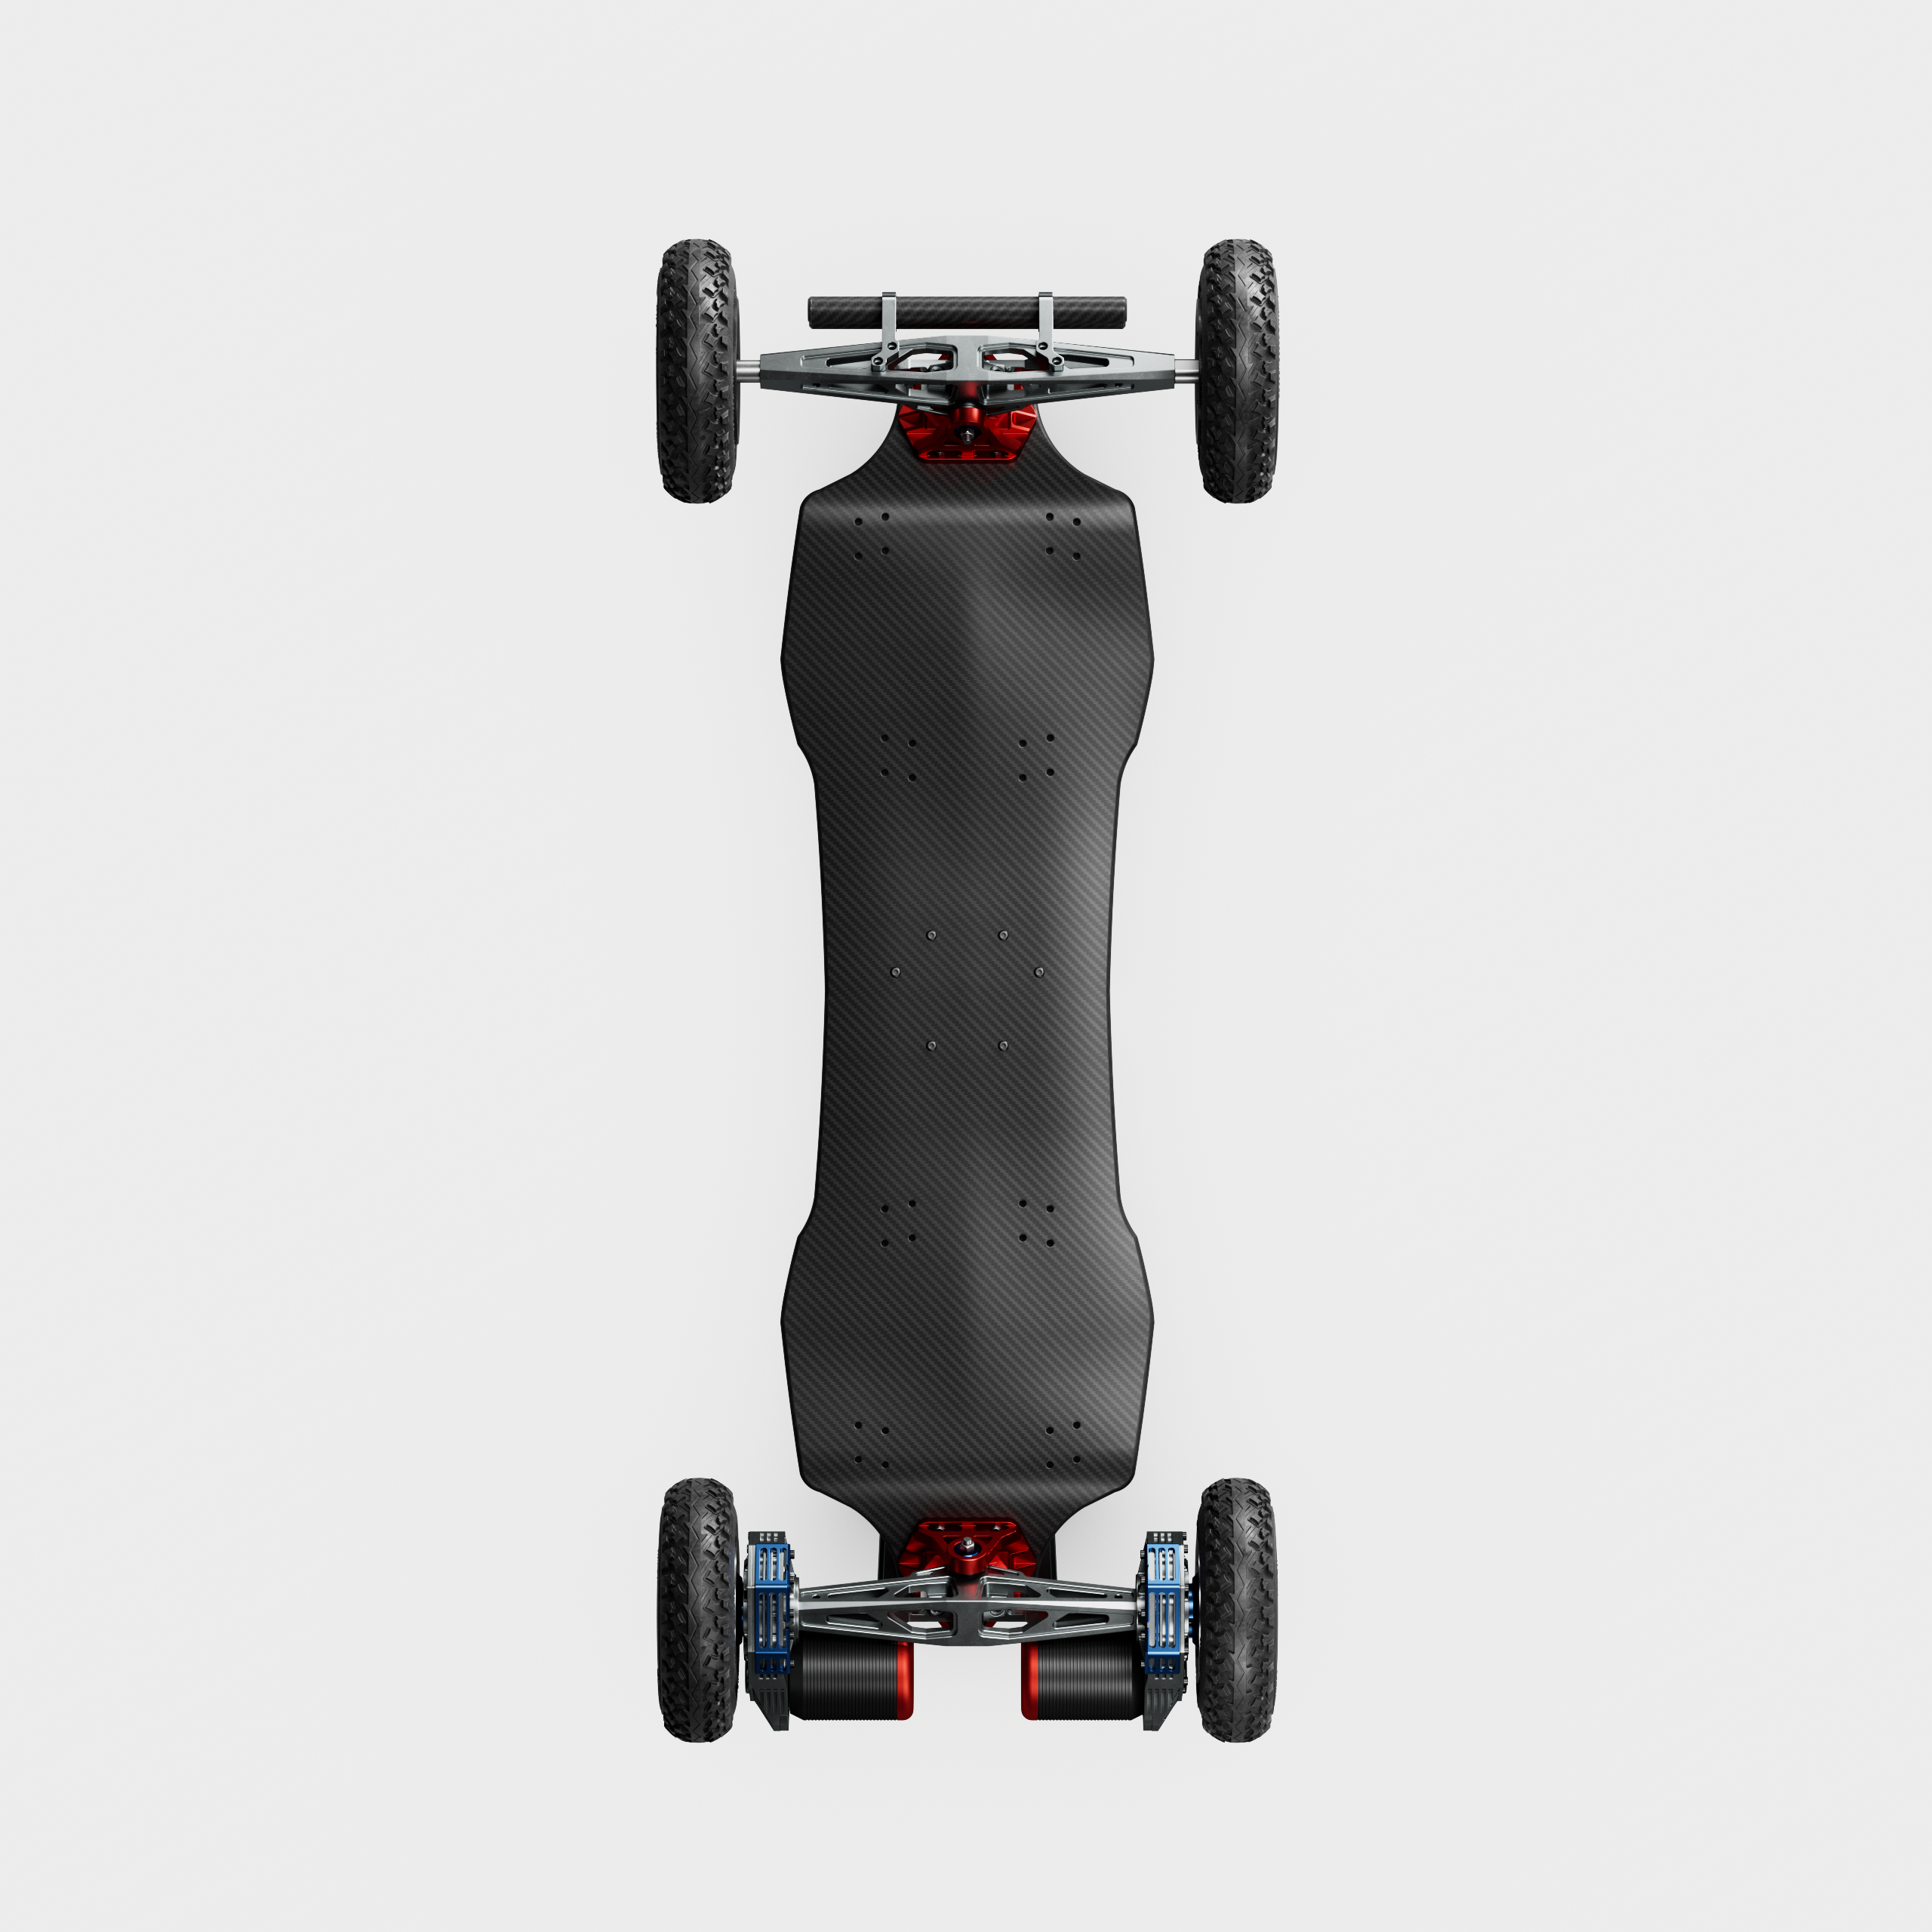 Acedeck® Nyx Z1 Off-road Electric Skateboard